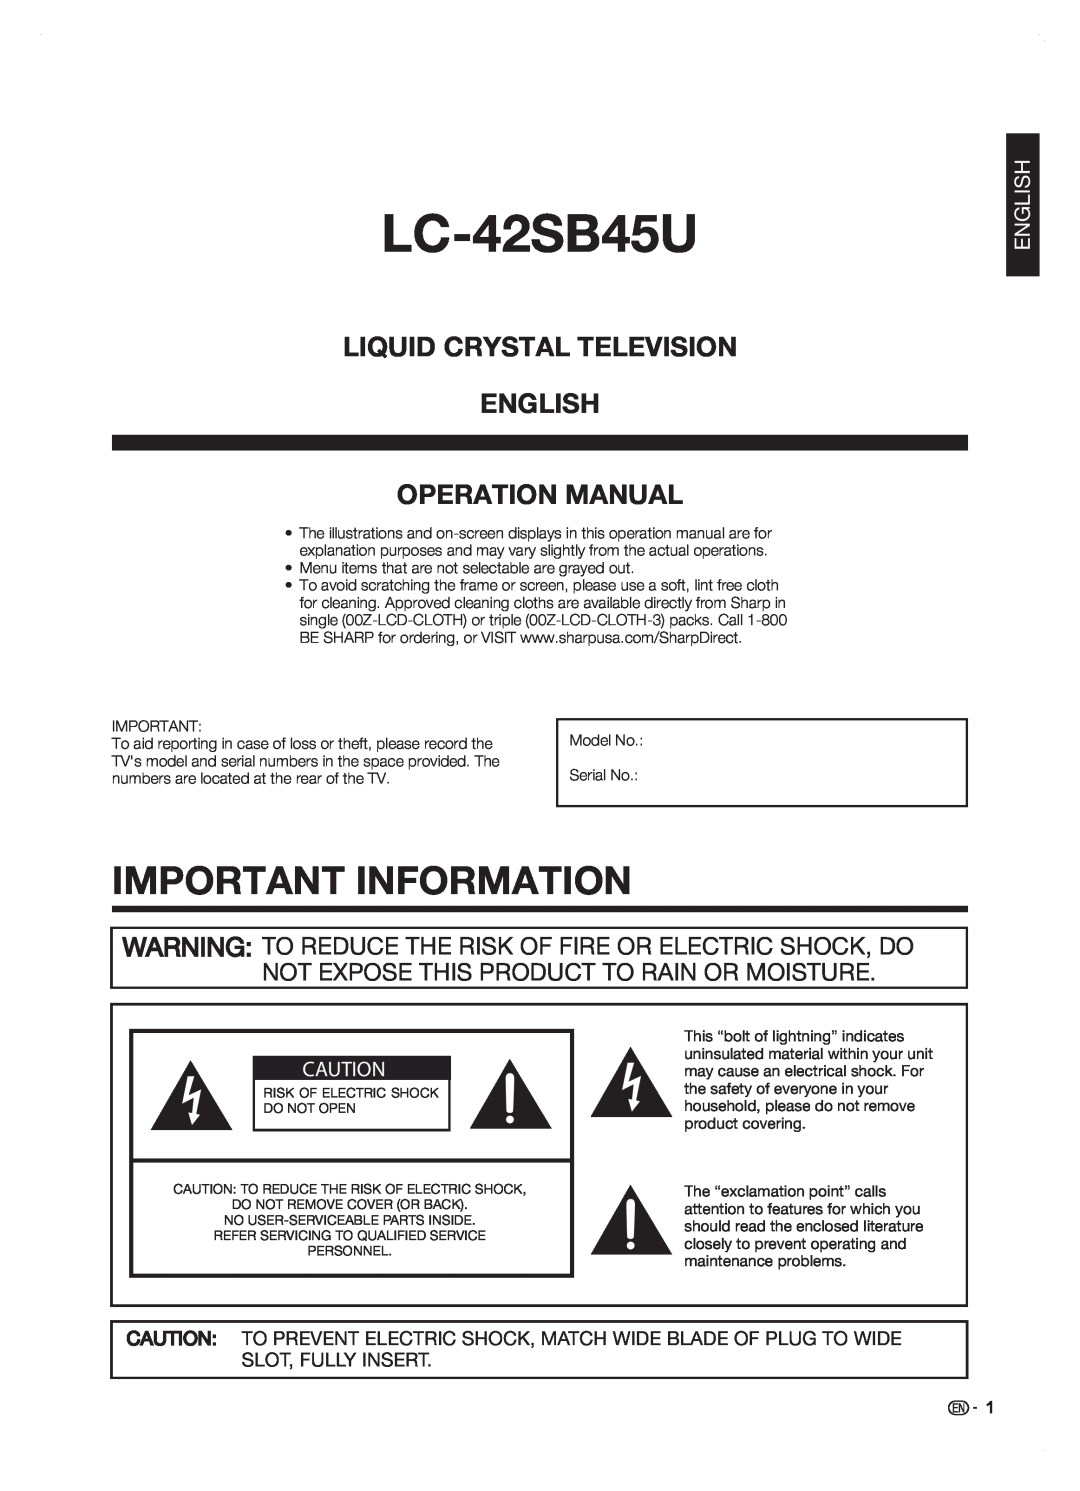 Sharp LC42SB45U operation manual Important Information, LC-42SB45U, Liquid Crystal Television English Operation Manual 